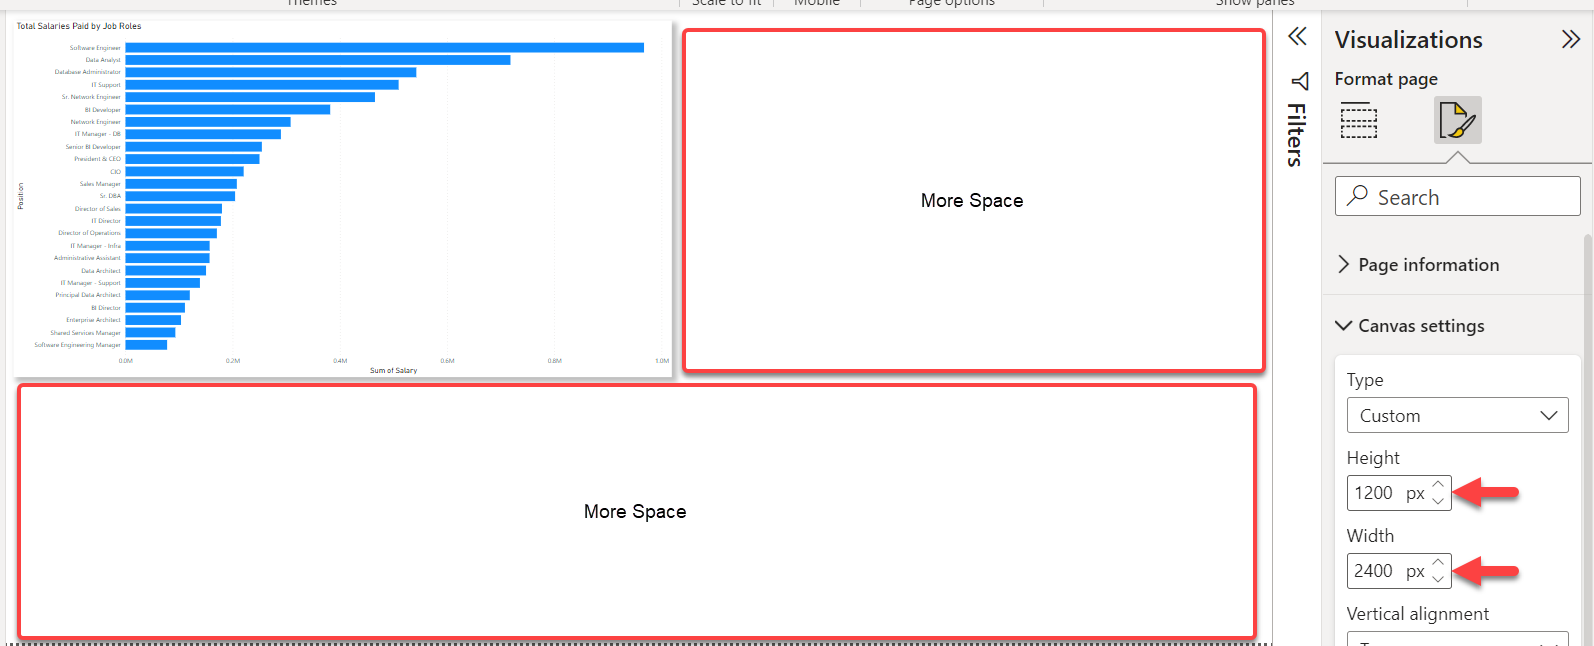 More space on power bi desktop